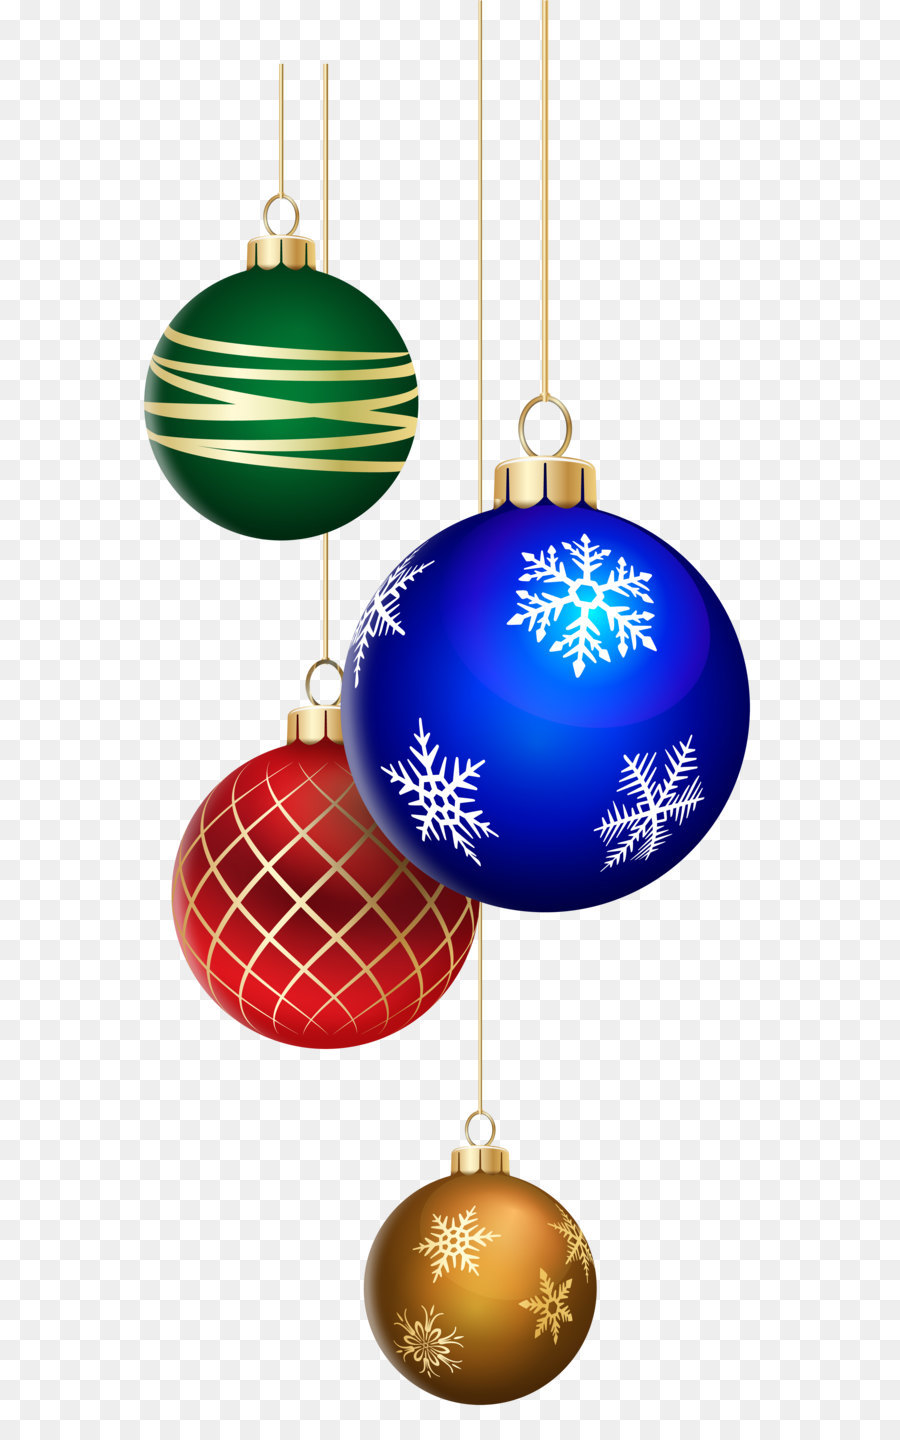 Christmas ornament - Christmas Balls Decorating PNG Clip Art Image png download - 3635*8000 - Free Transparent Christmas Ornament png Download.